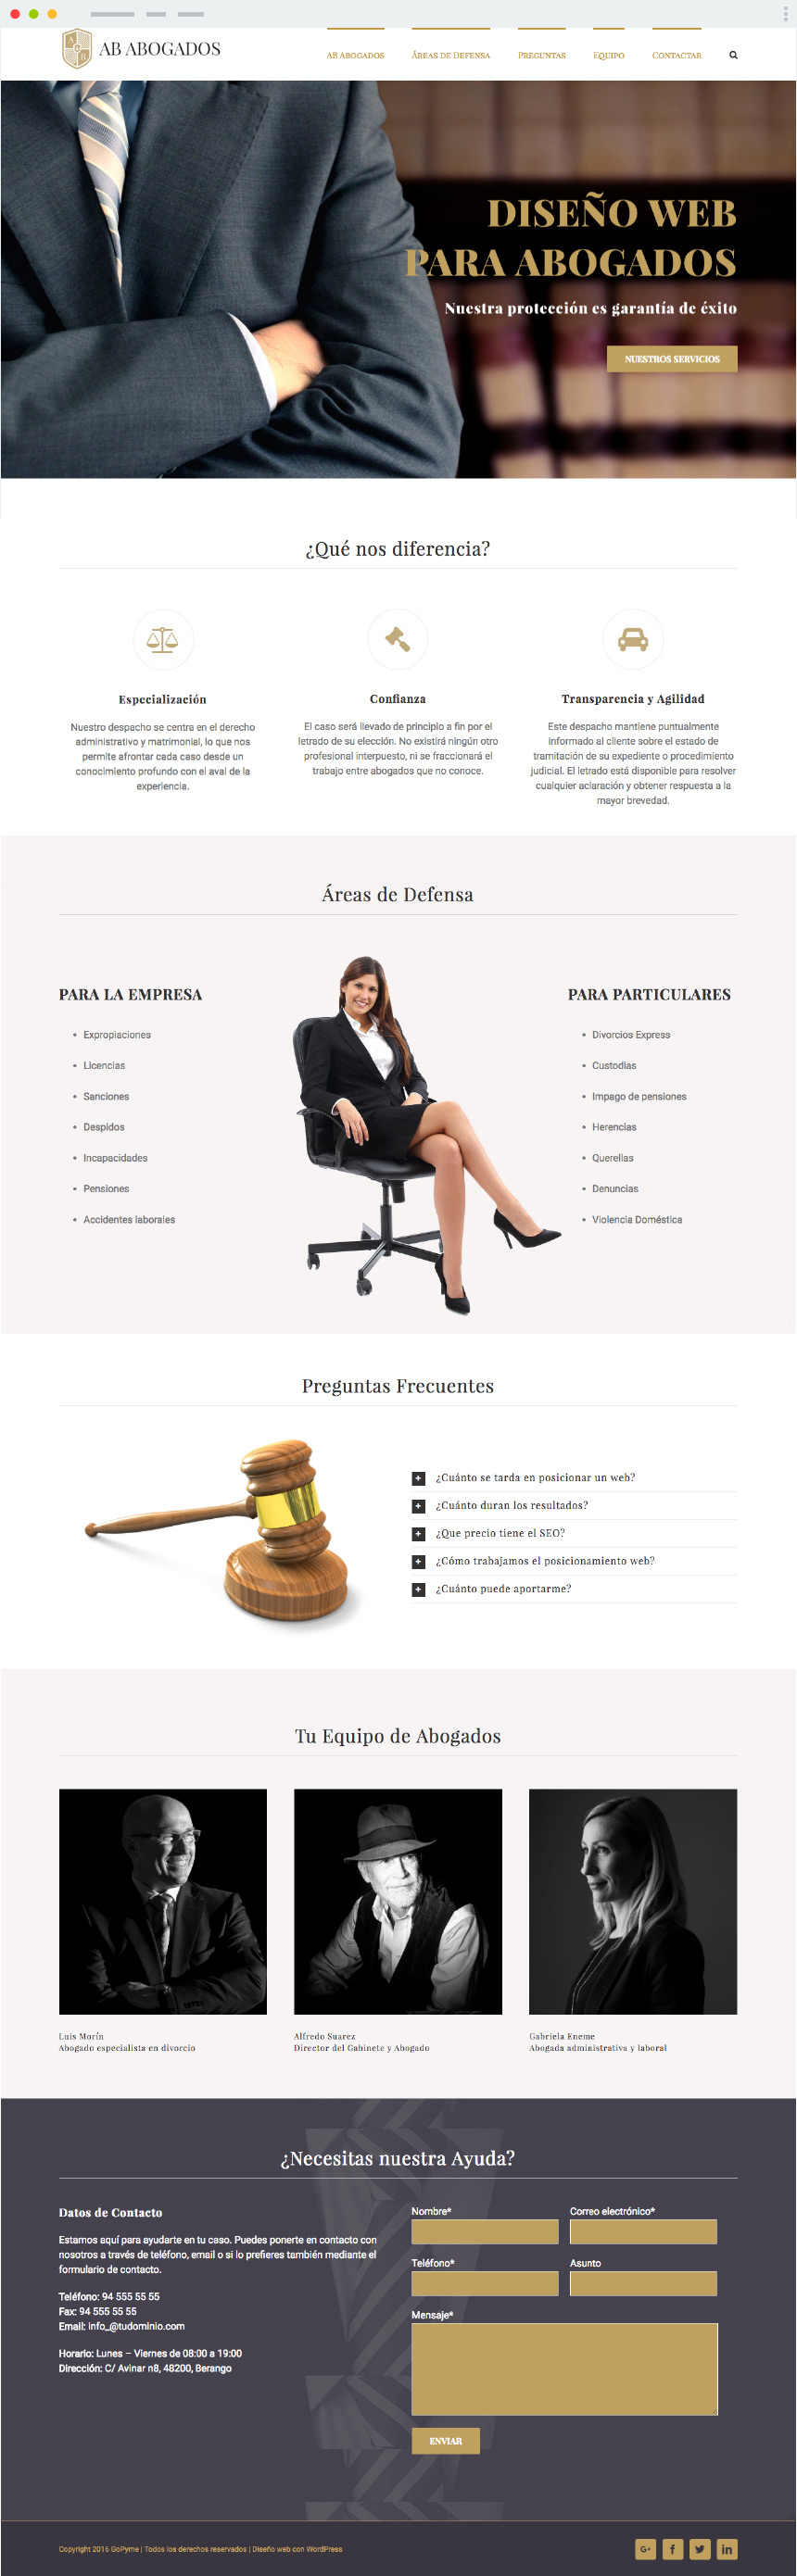 plantilla de diseño web para abogados